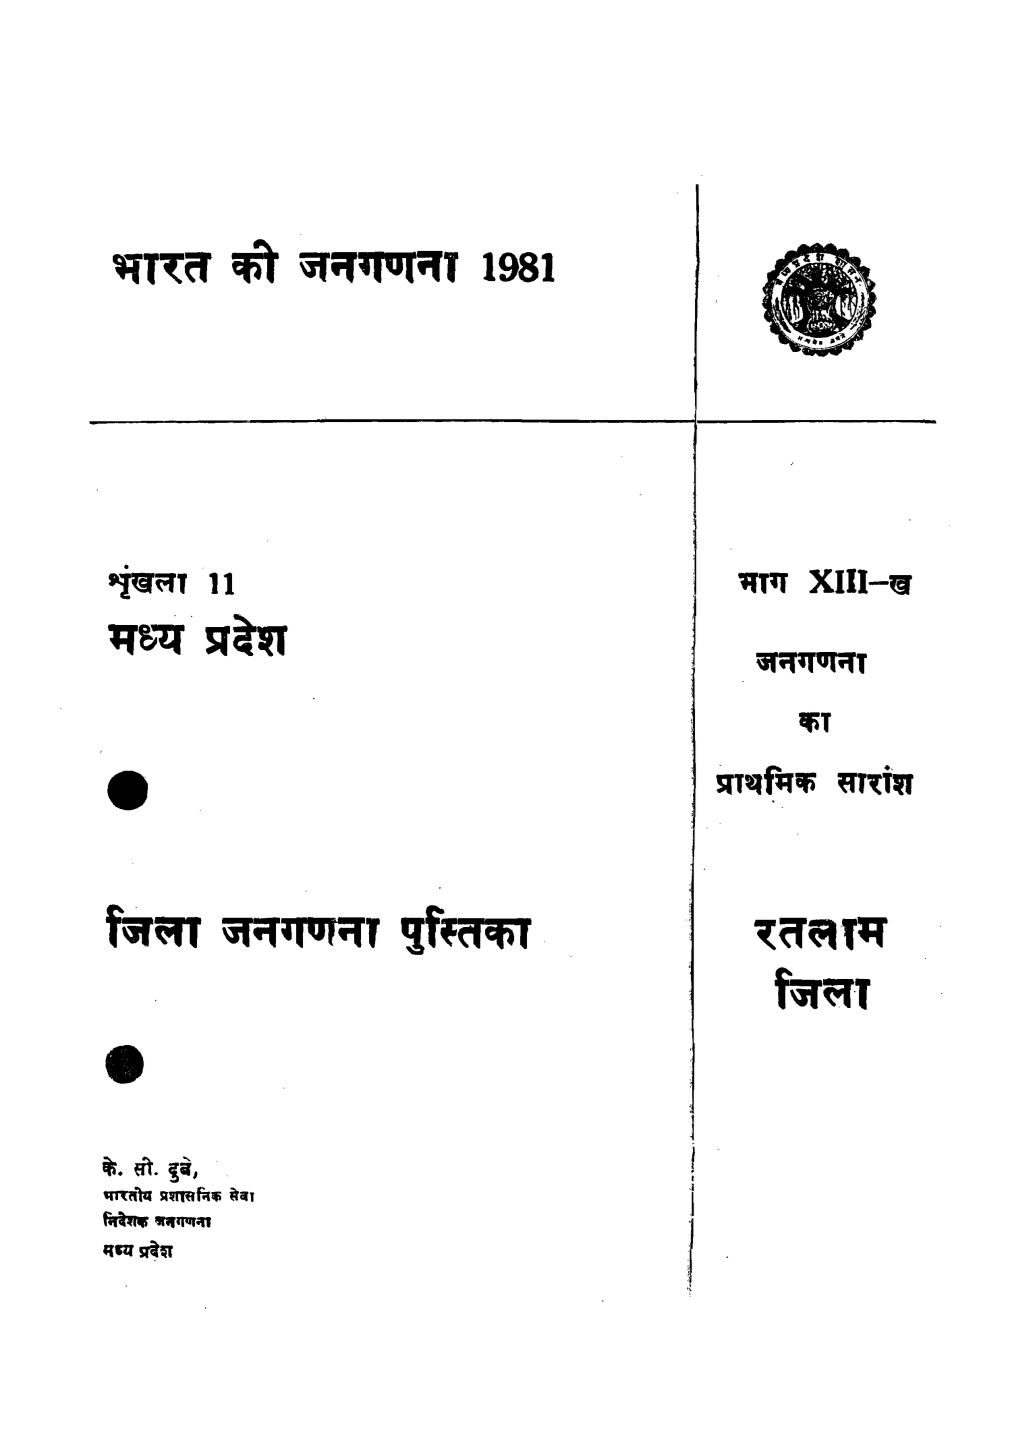 District Census Handbook, Ratlam, Part XIII-B, Series-11